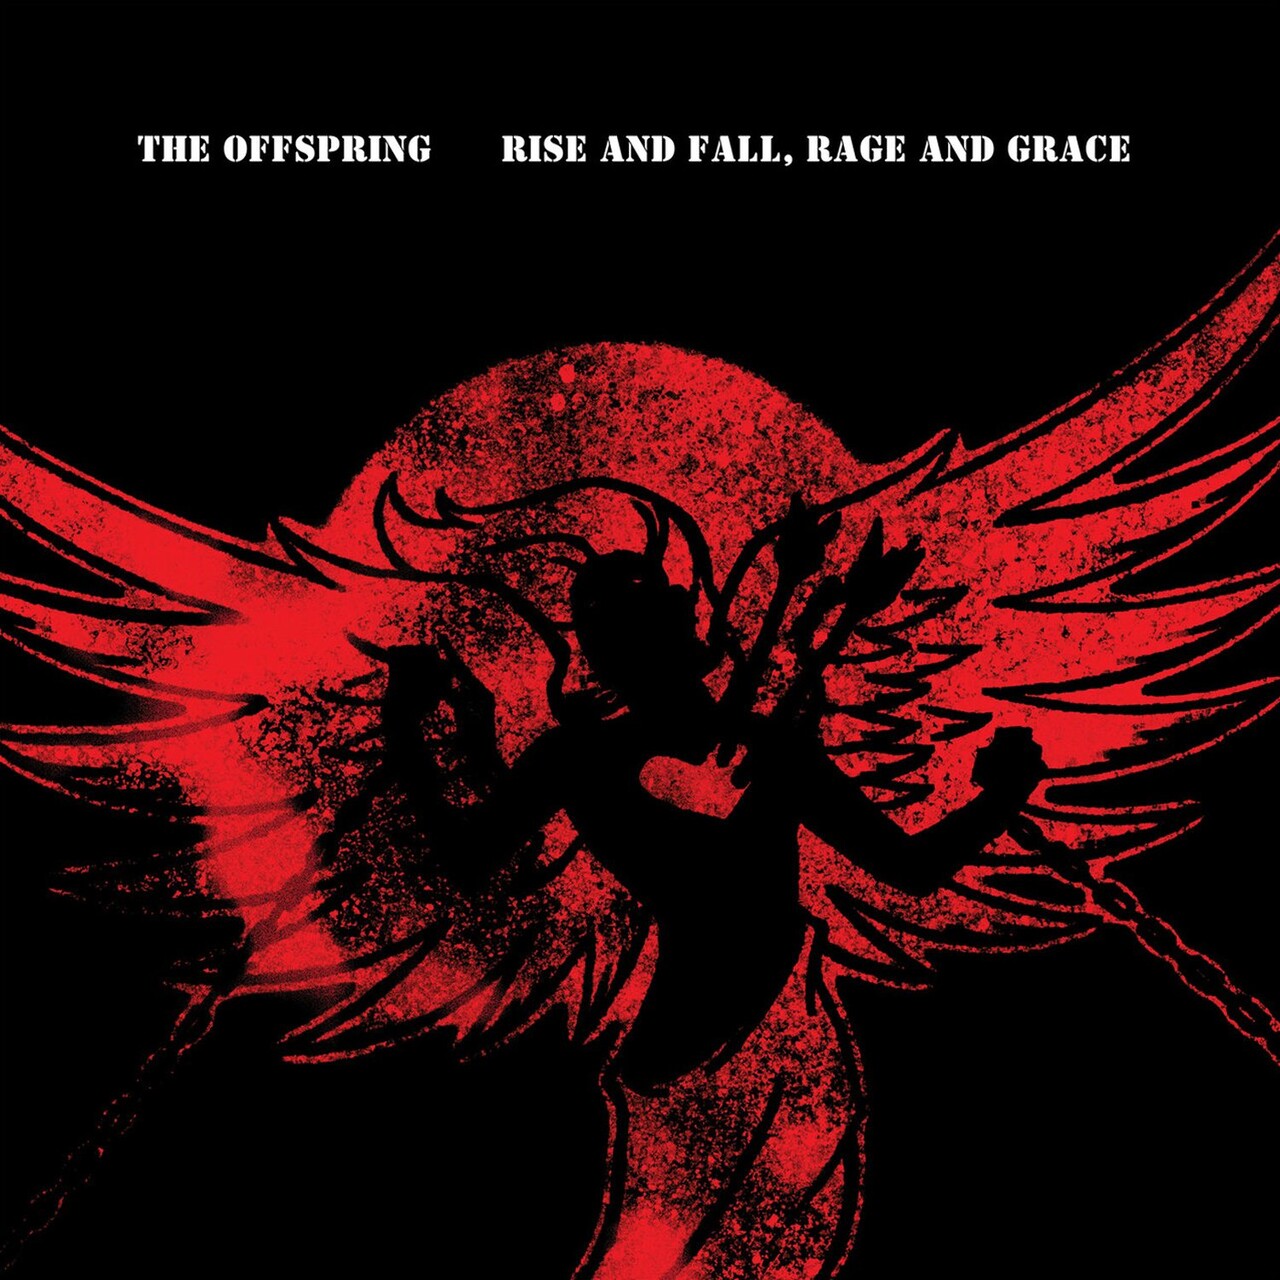 Рок Universal (Aus) Offspring, The - Rise And Fall, Rage And Grace (Black Vinyl LP) рок ume usm offspring the americana